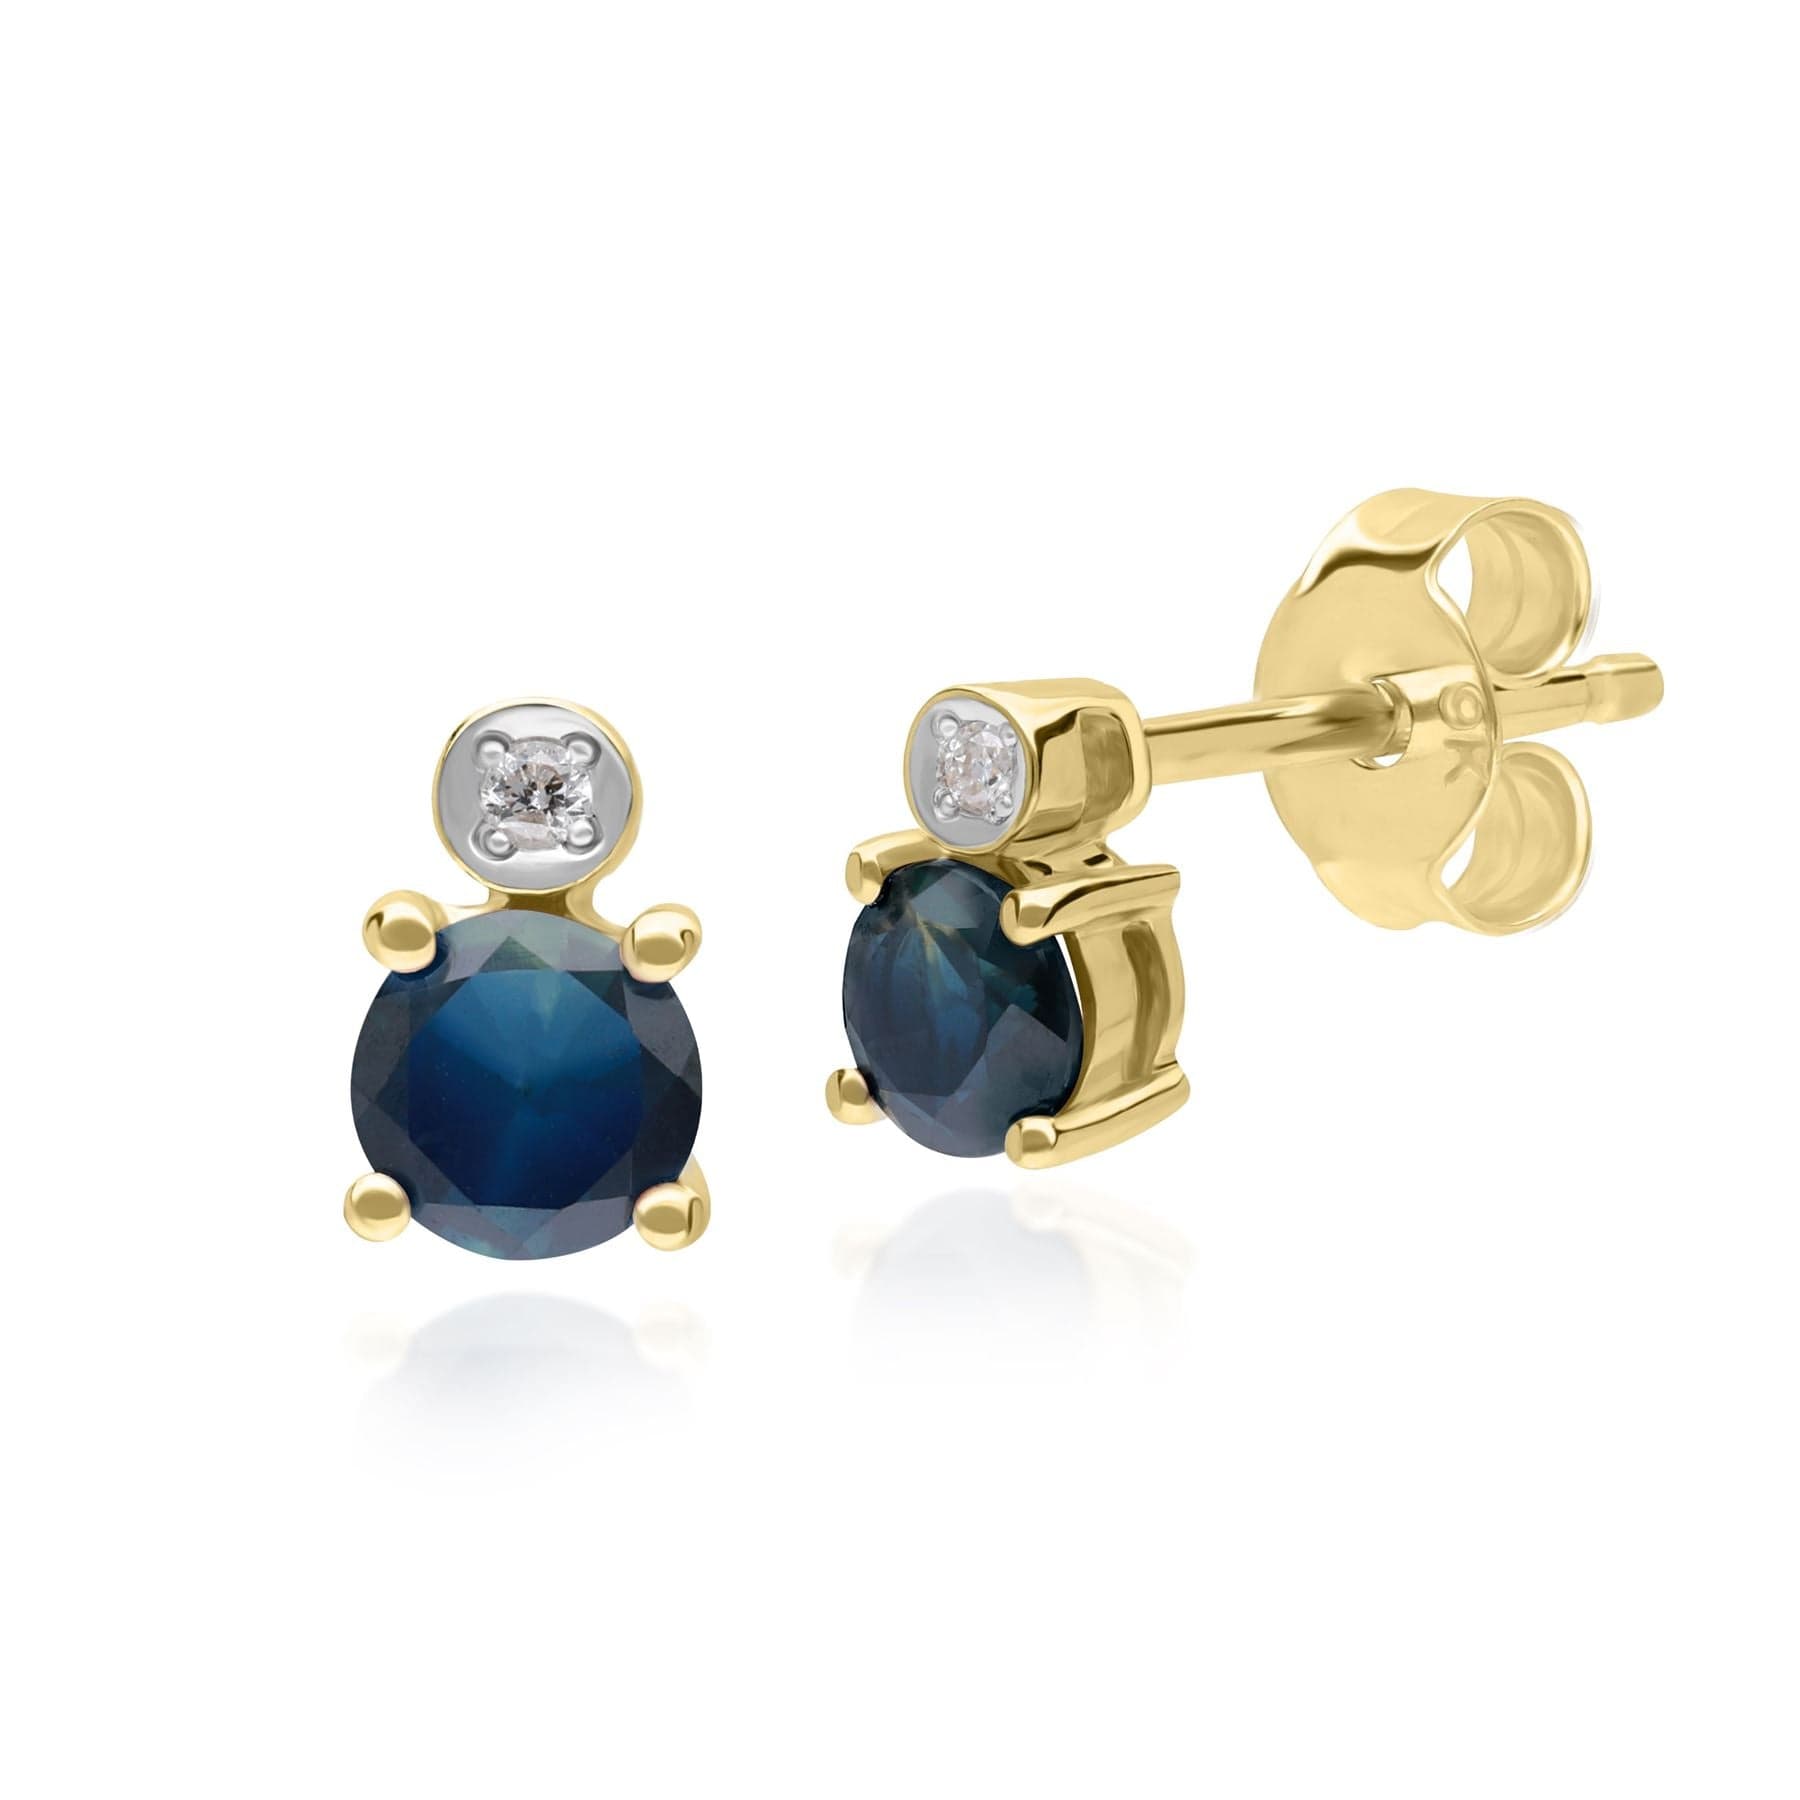 Micro Statement Round Sapphire & Diamond Stud Earrings in 9ct Yellow Gold - Gemondo